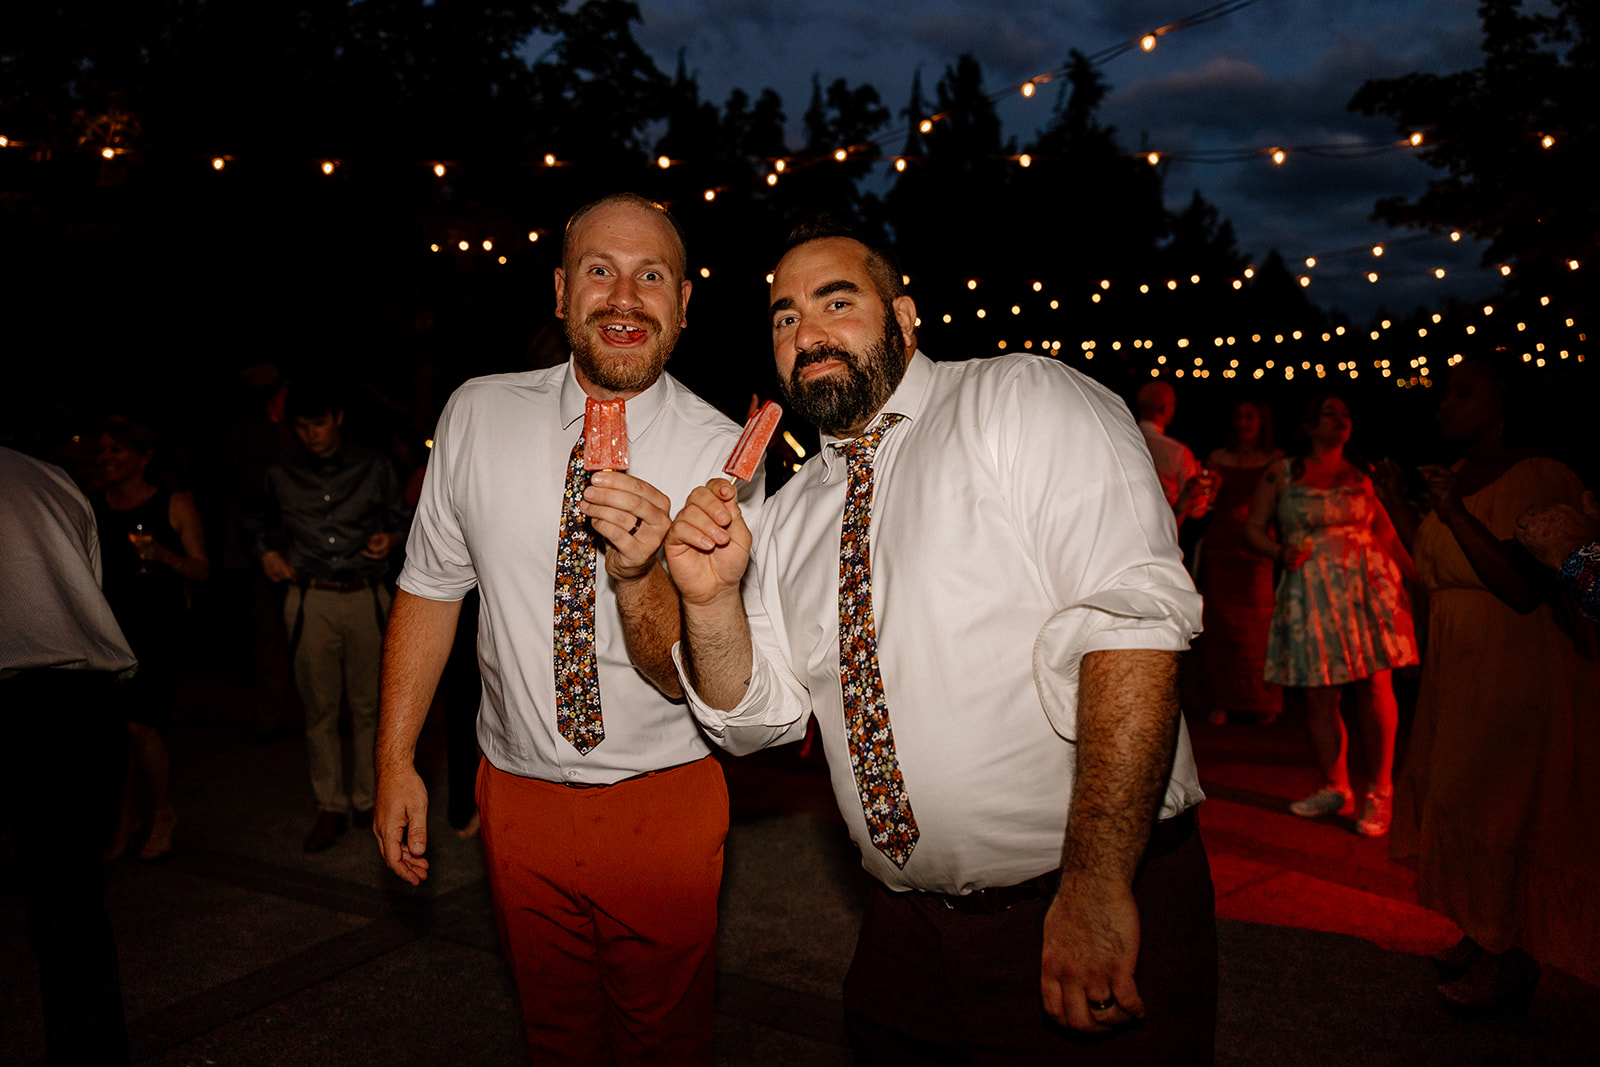 Two grooms enjoying Sloshy Pops at their Oregon Garden wedding reception. 